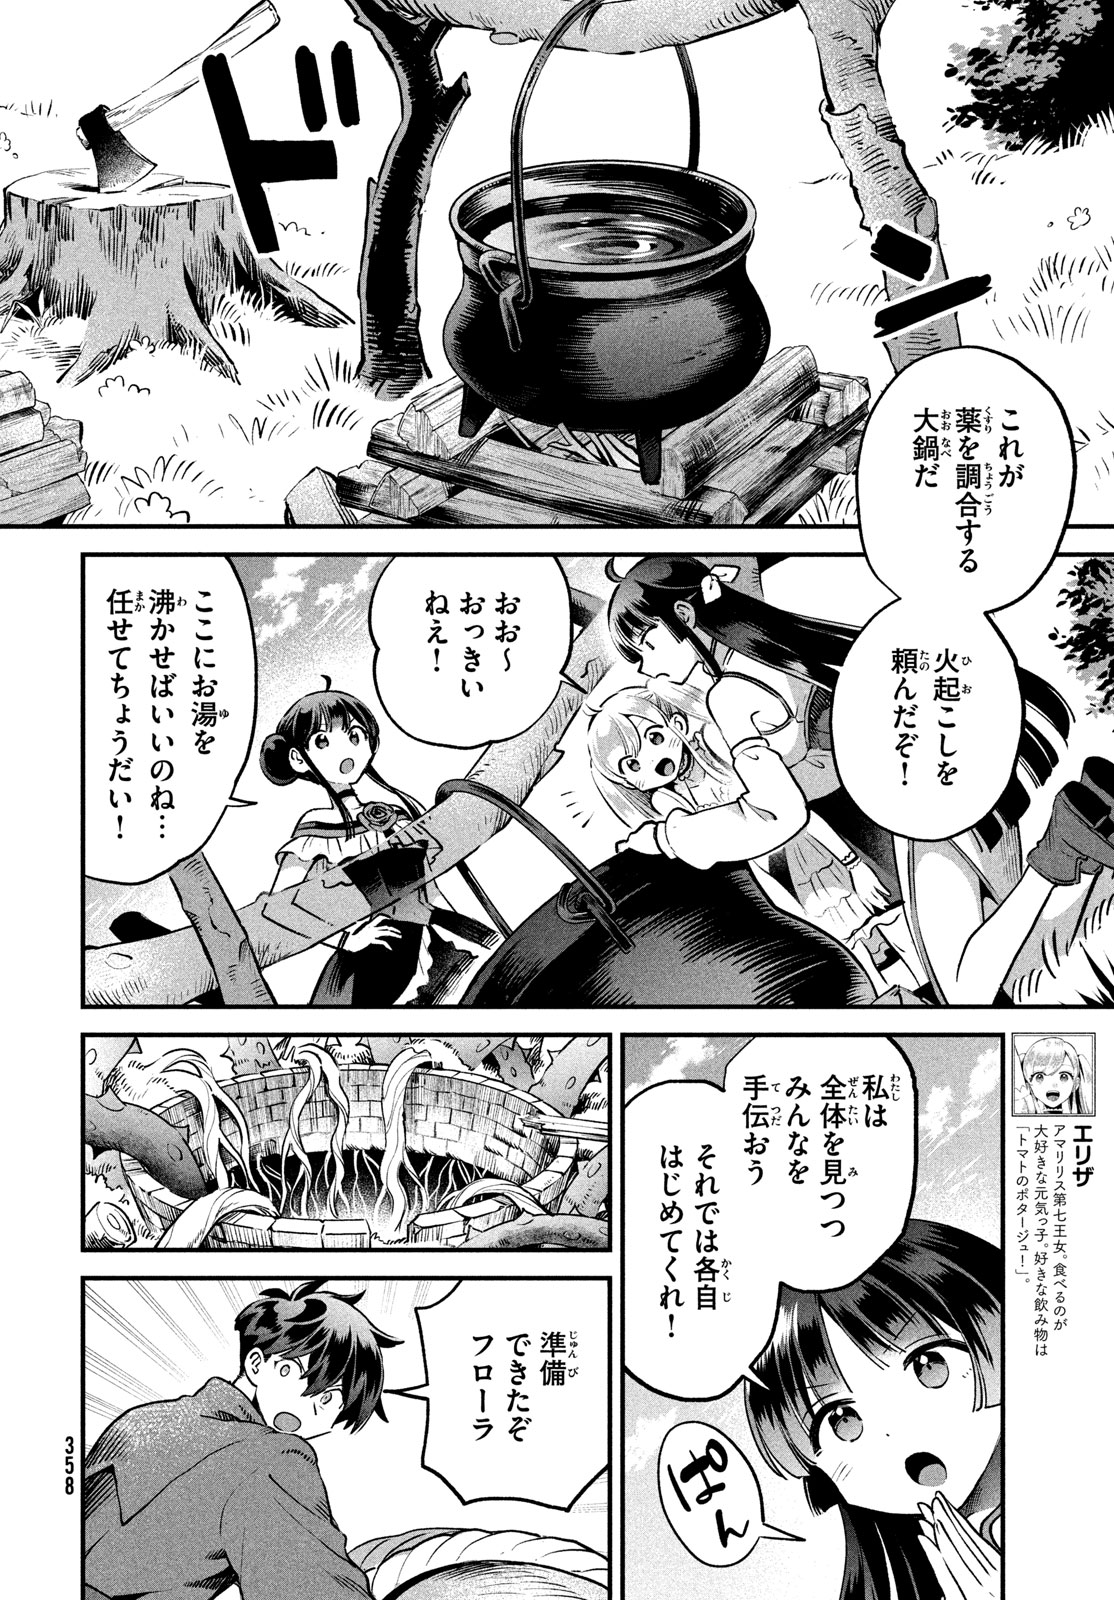 7-nin no Nemuri Hime - Chapter 45 - Page 4